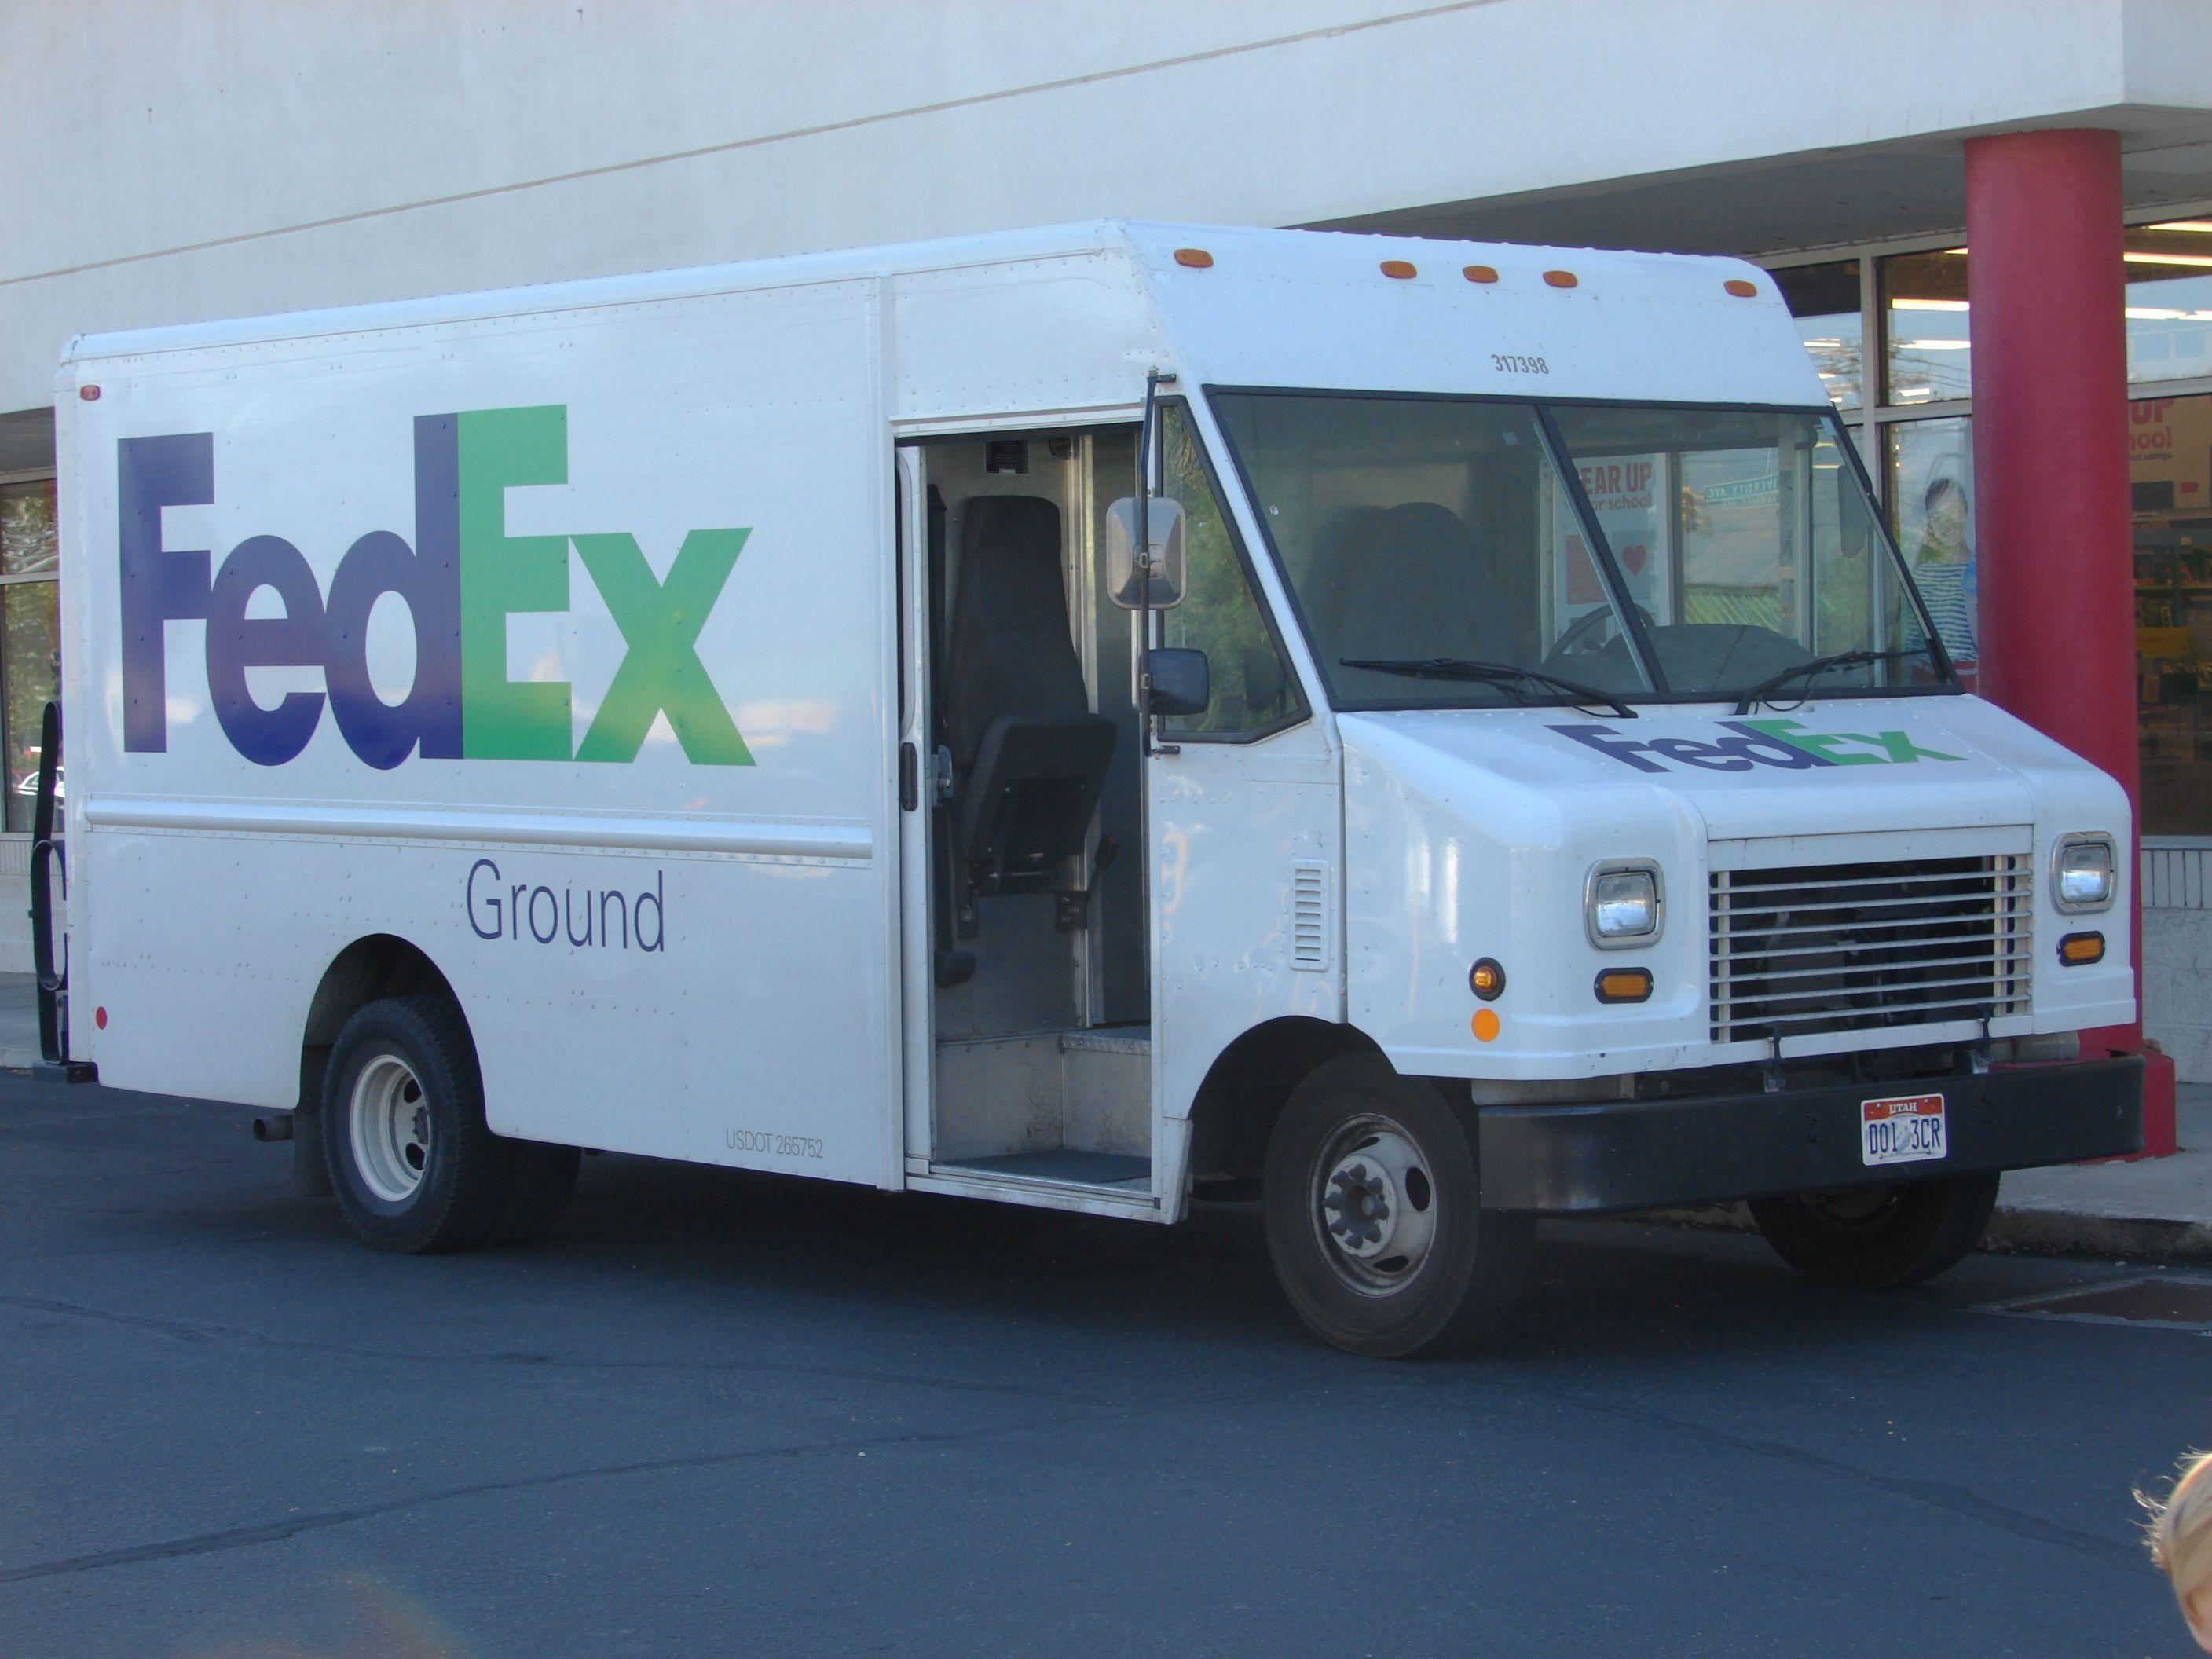 Green Van FedEx Ground Logo - File:FedEx Ground delivery van, Jul 15.JPG - Wikimedia Commons